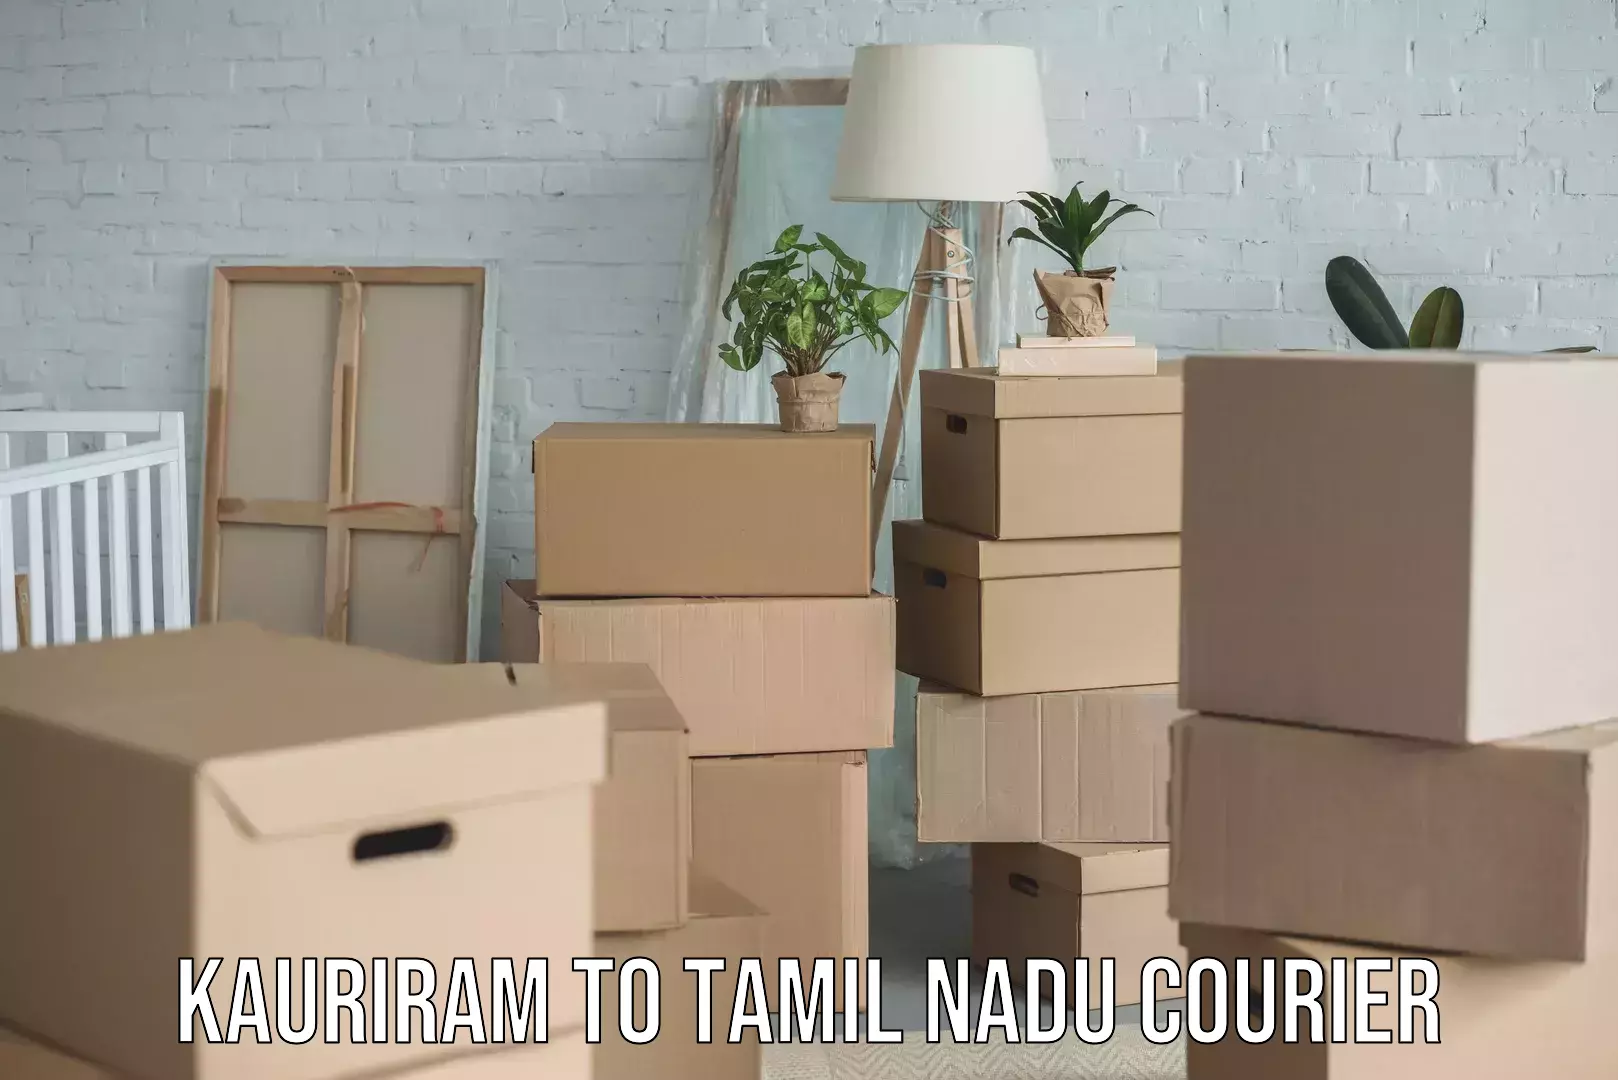 Household moving and storage Kauriram to Tamil Nadu